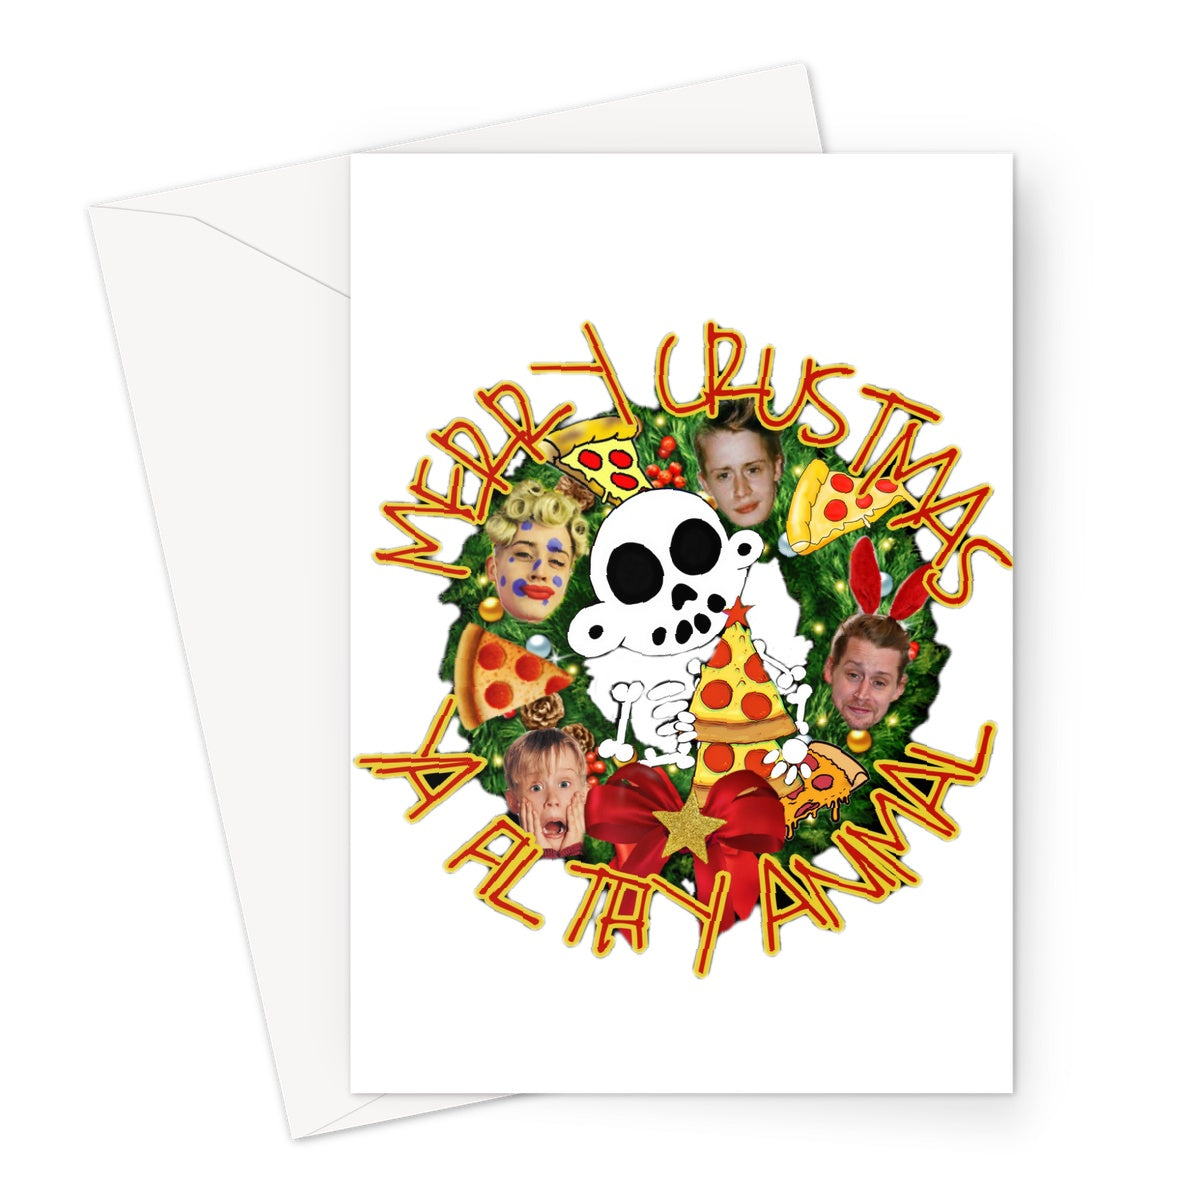 Zanoskull - "Merry Crustmas" (Greeting Card)